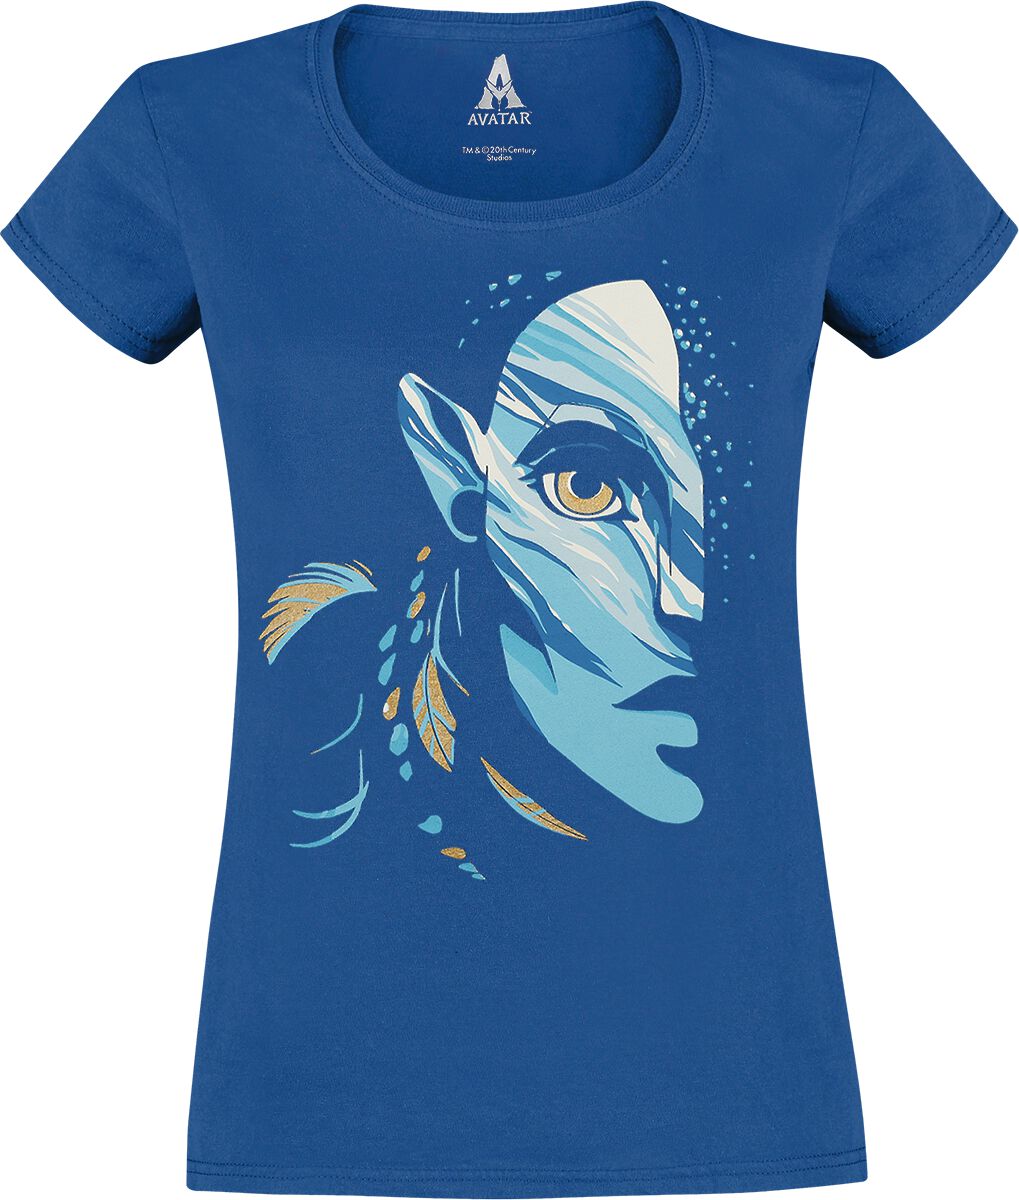 Avatar 2 Face T-Shirt blau von Avatar (Film)